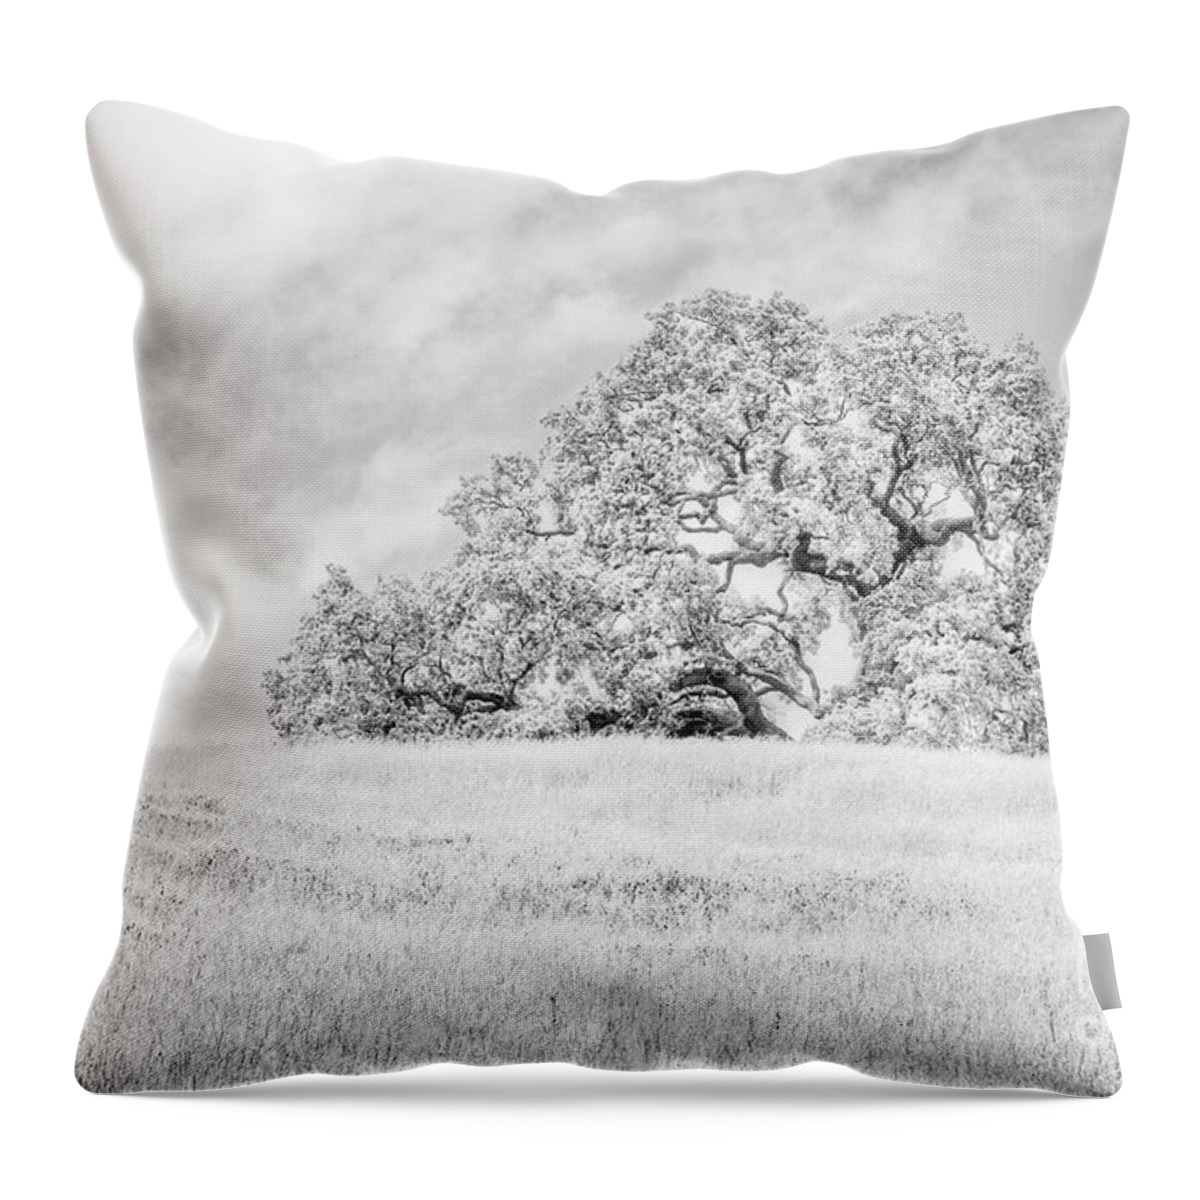 Clouds Throw Pillow featuring the photograph Ancient Oak by Dean Birinyi